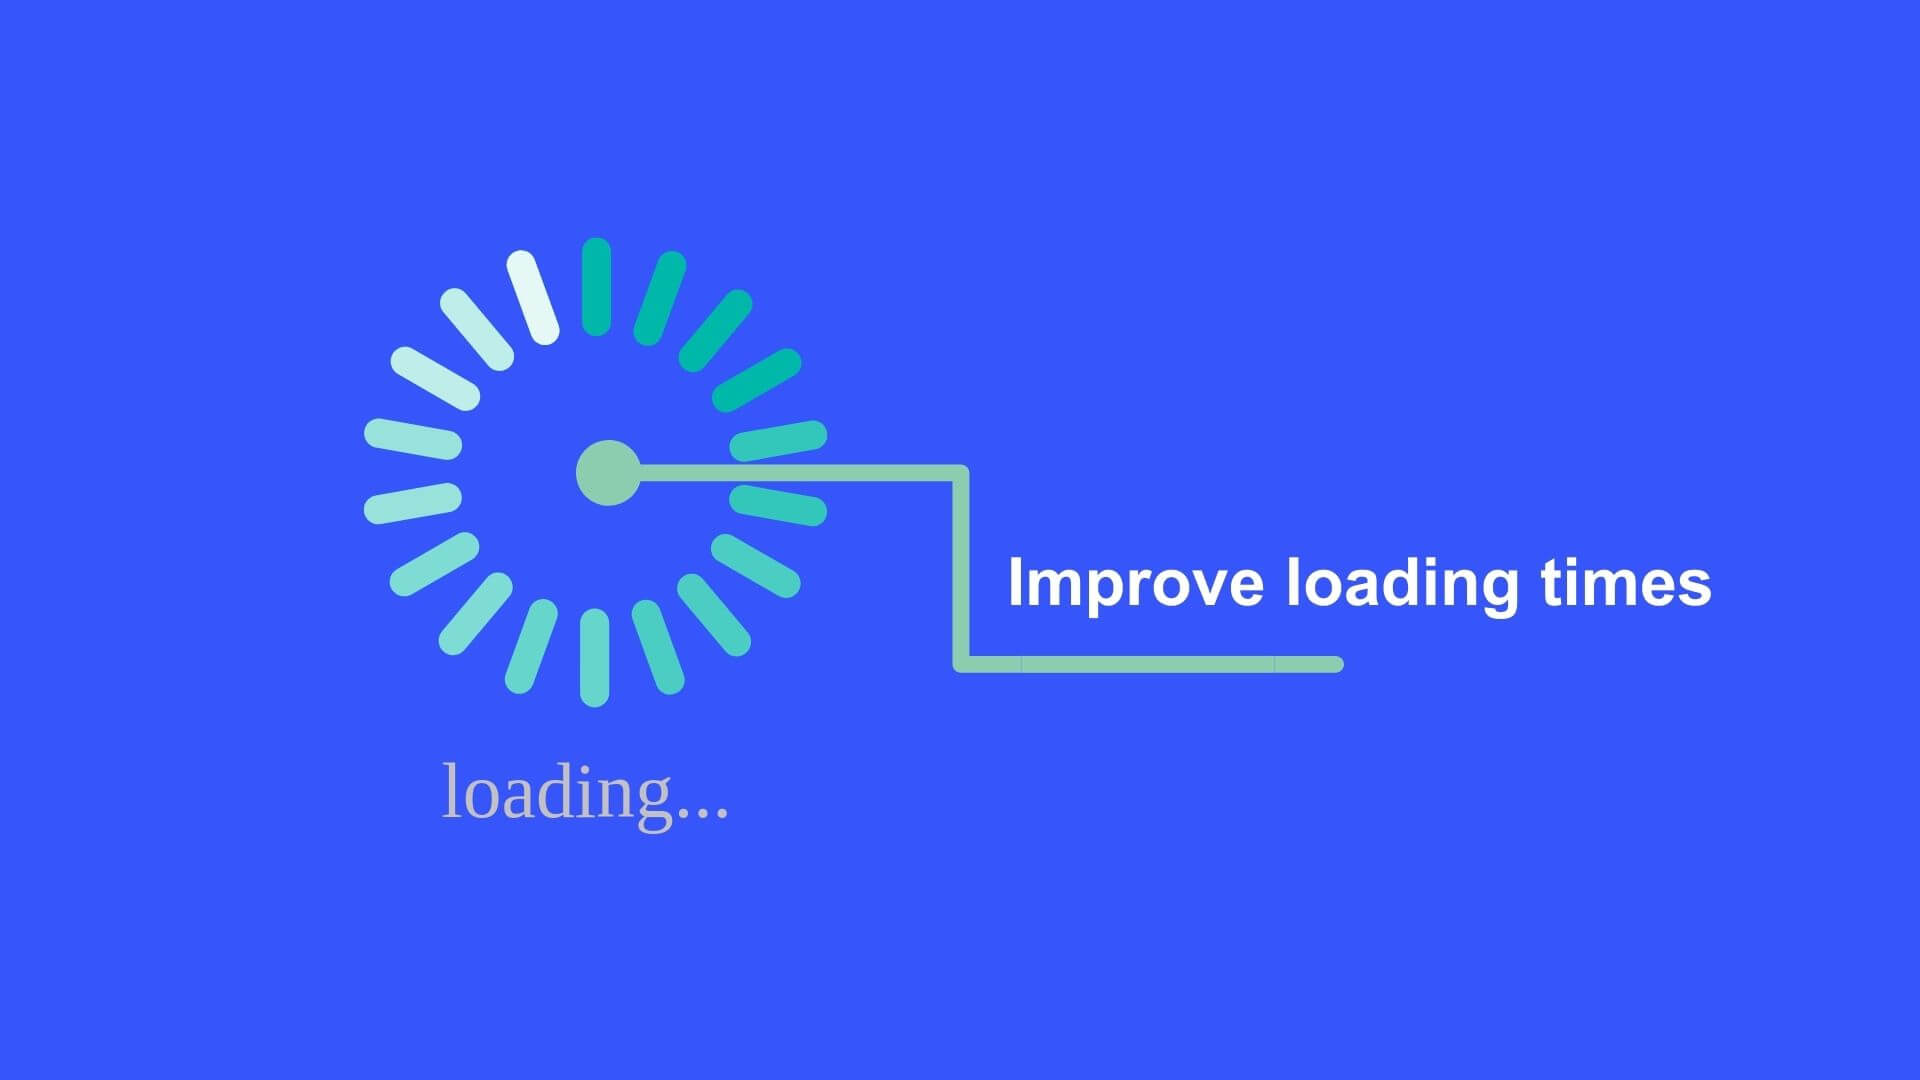 Improve loading times